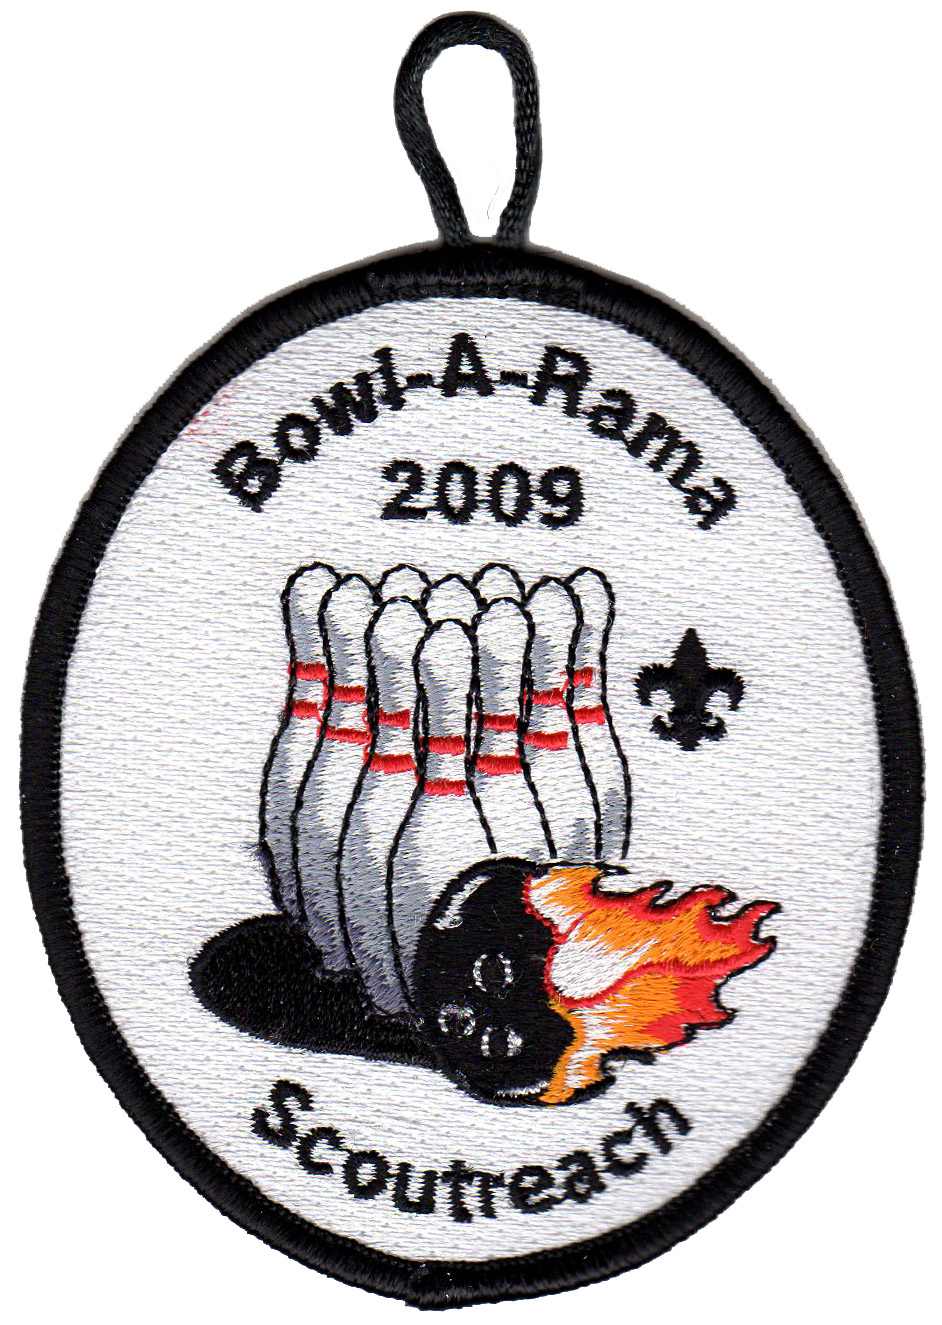 2009 Bowl-a-rama